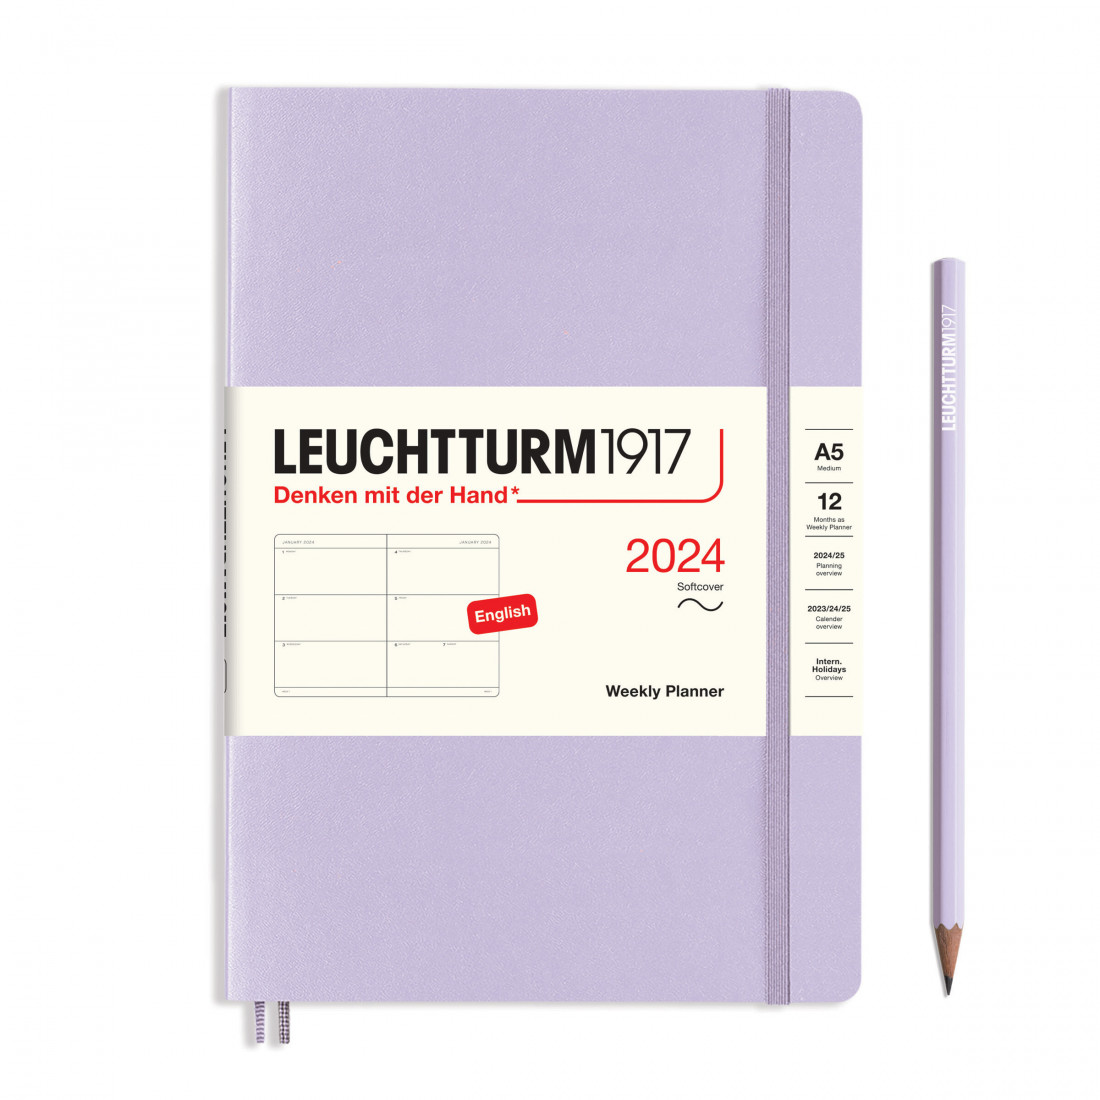 Leuchtturm 1917 Weekly Planner 2024 Lilac Medium A5 Soft Cover